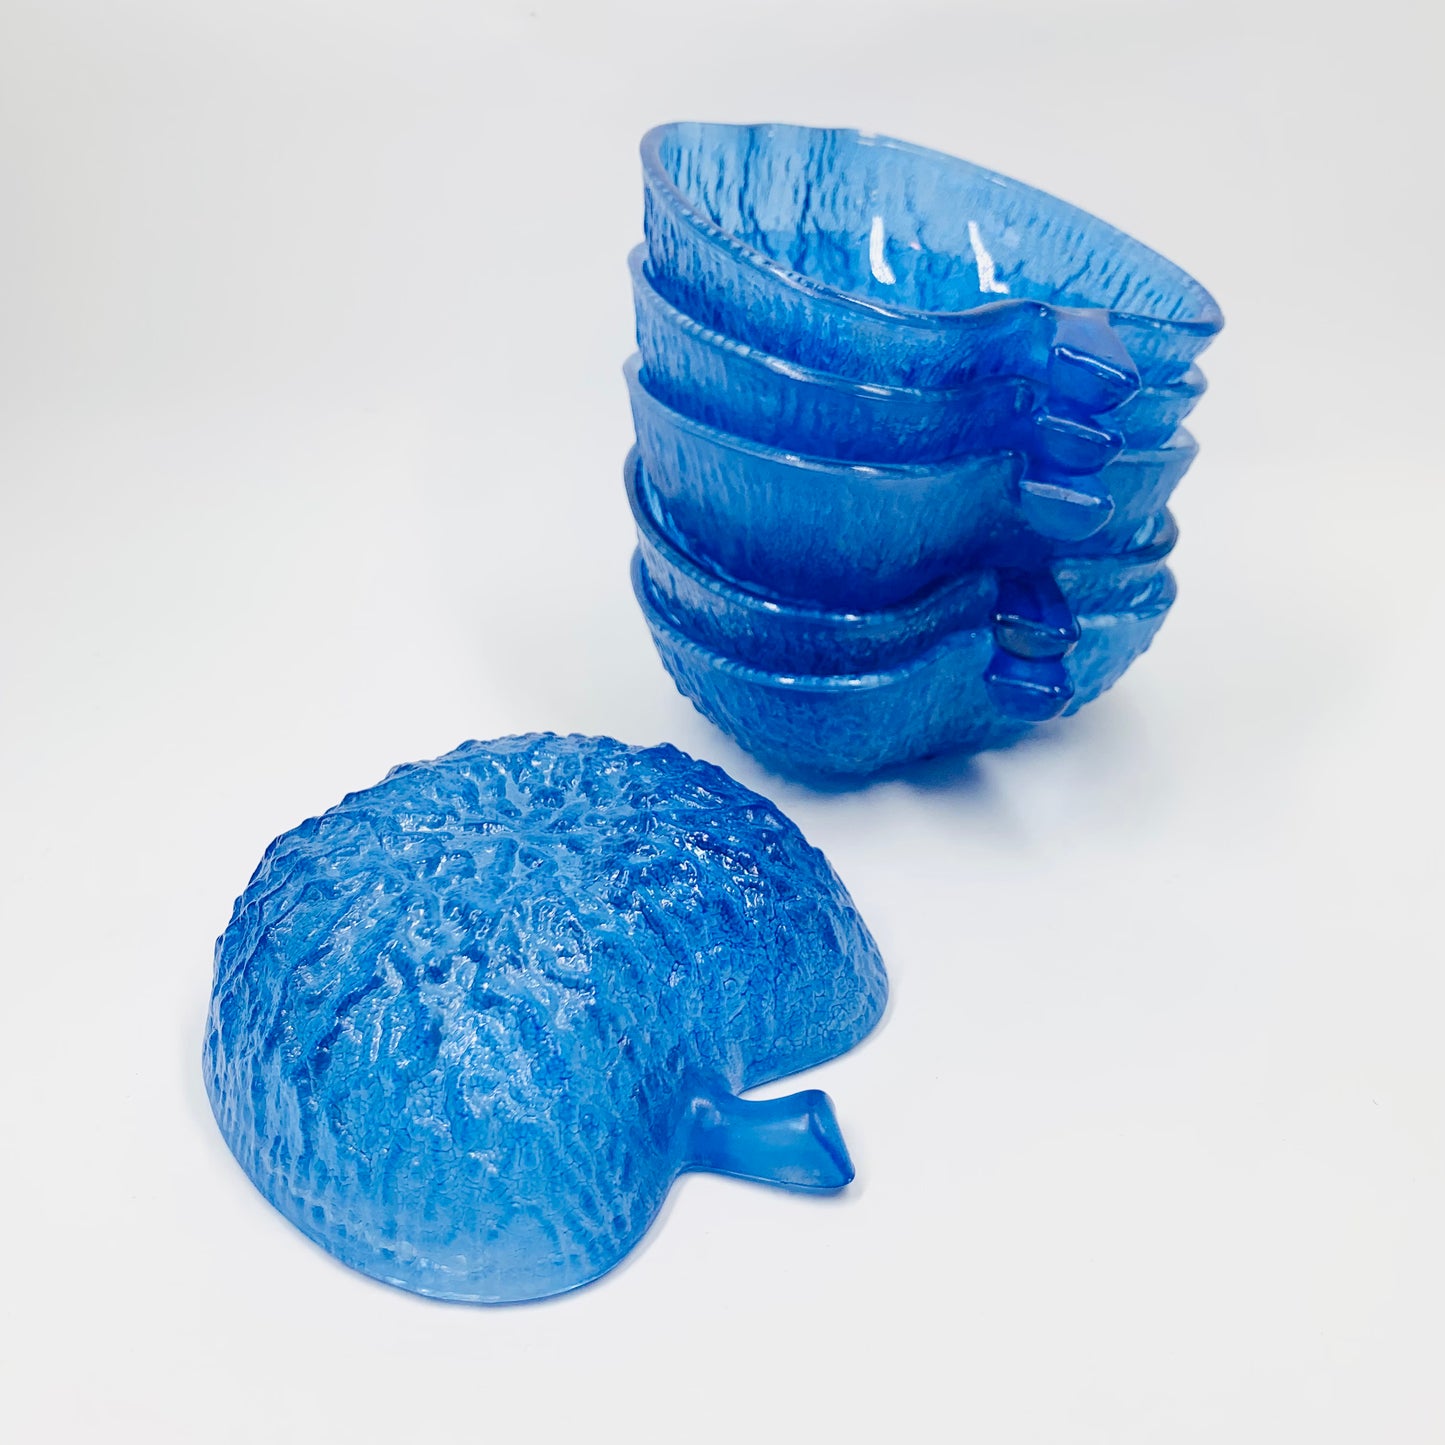 Retro apple shaped blue ice glass bowls